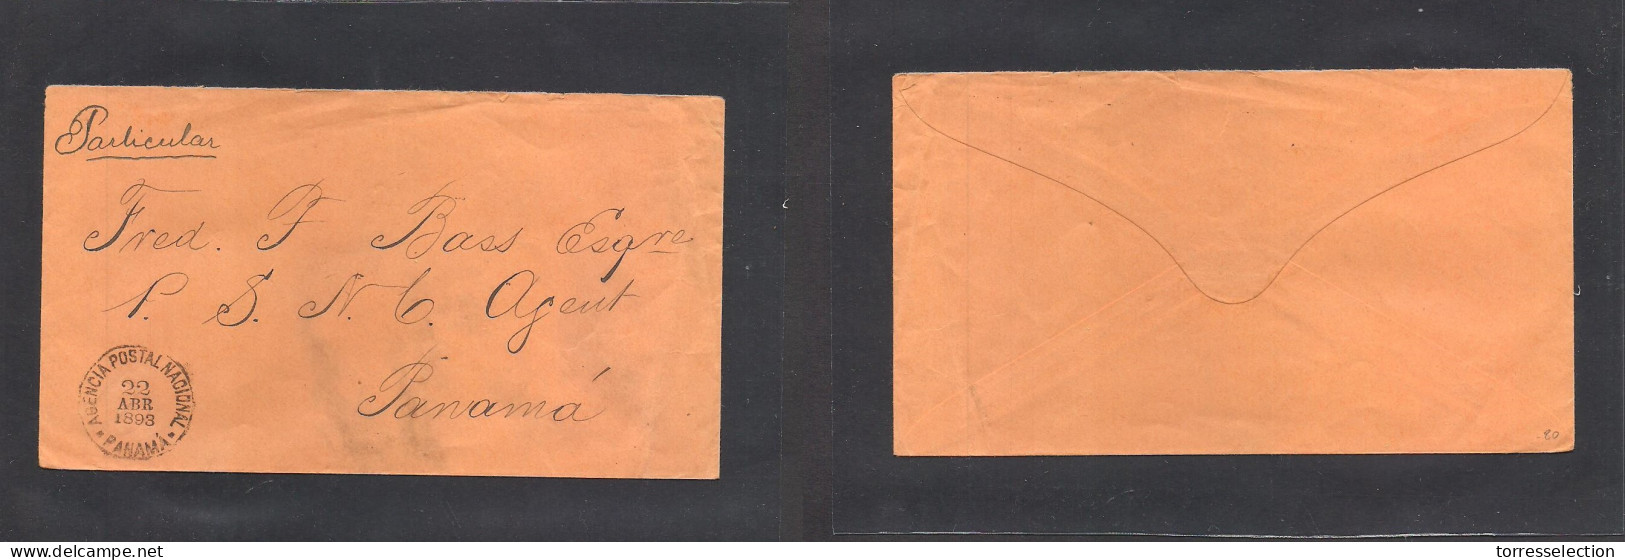 PANAMA. 1893 (22 April) APN Panama. Local Usage Free Mail To Fred Bass /PSNC Agent Cds. XF. - Panamá